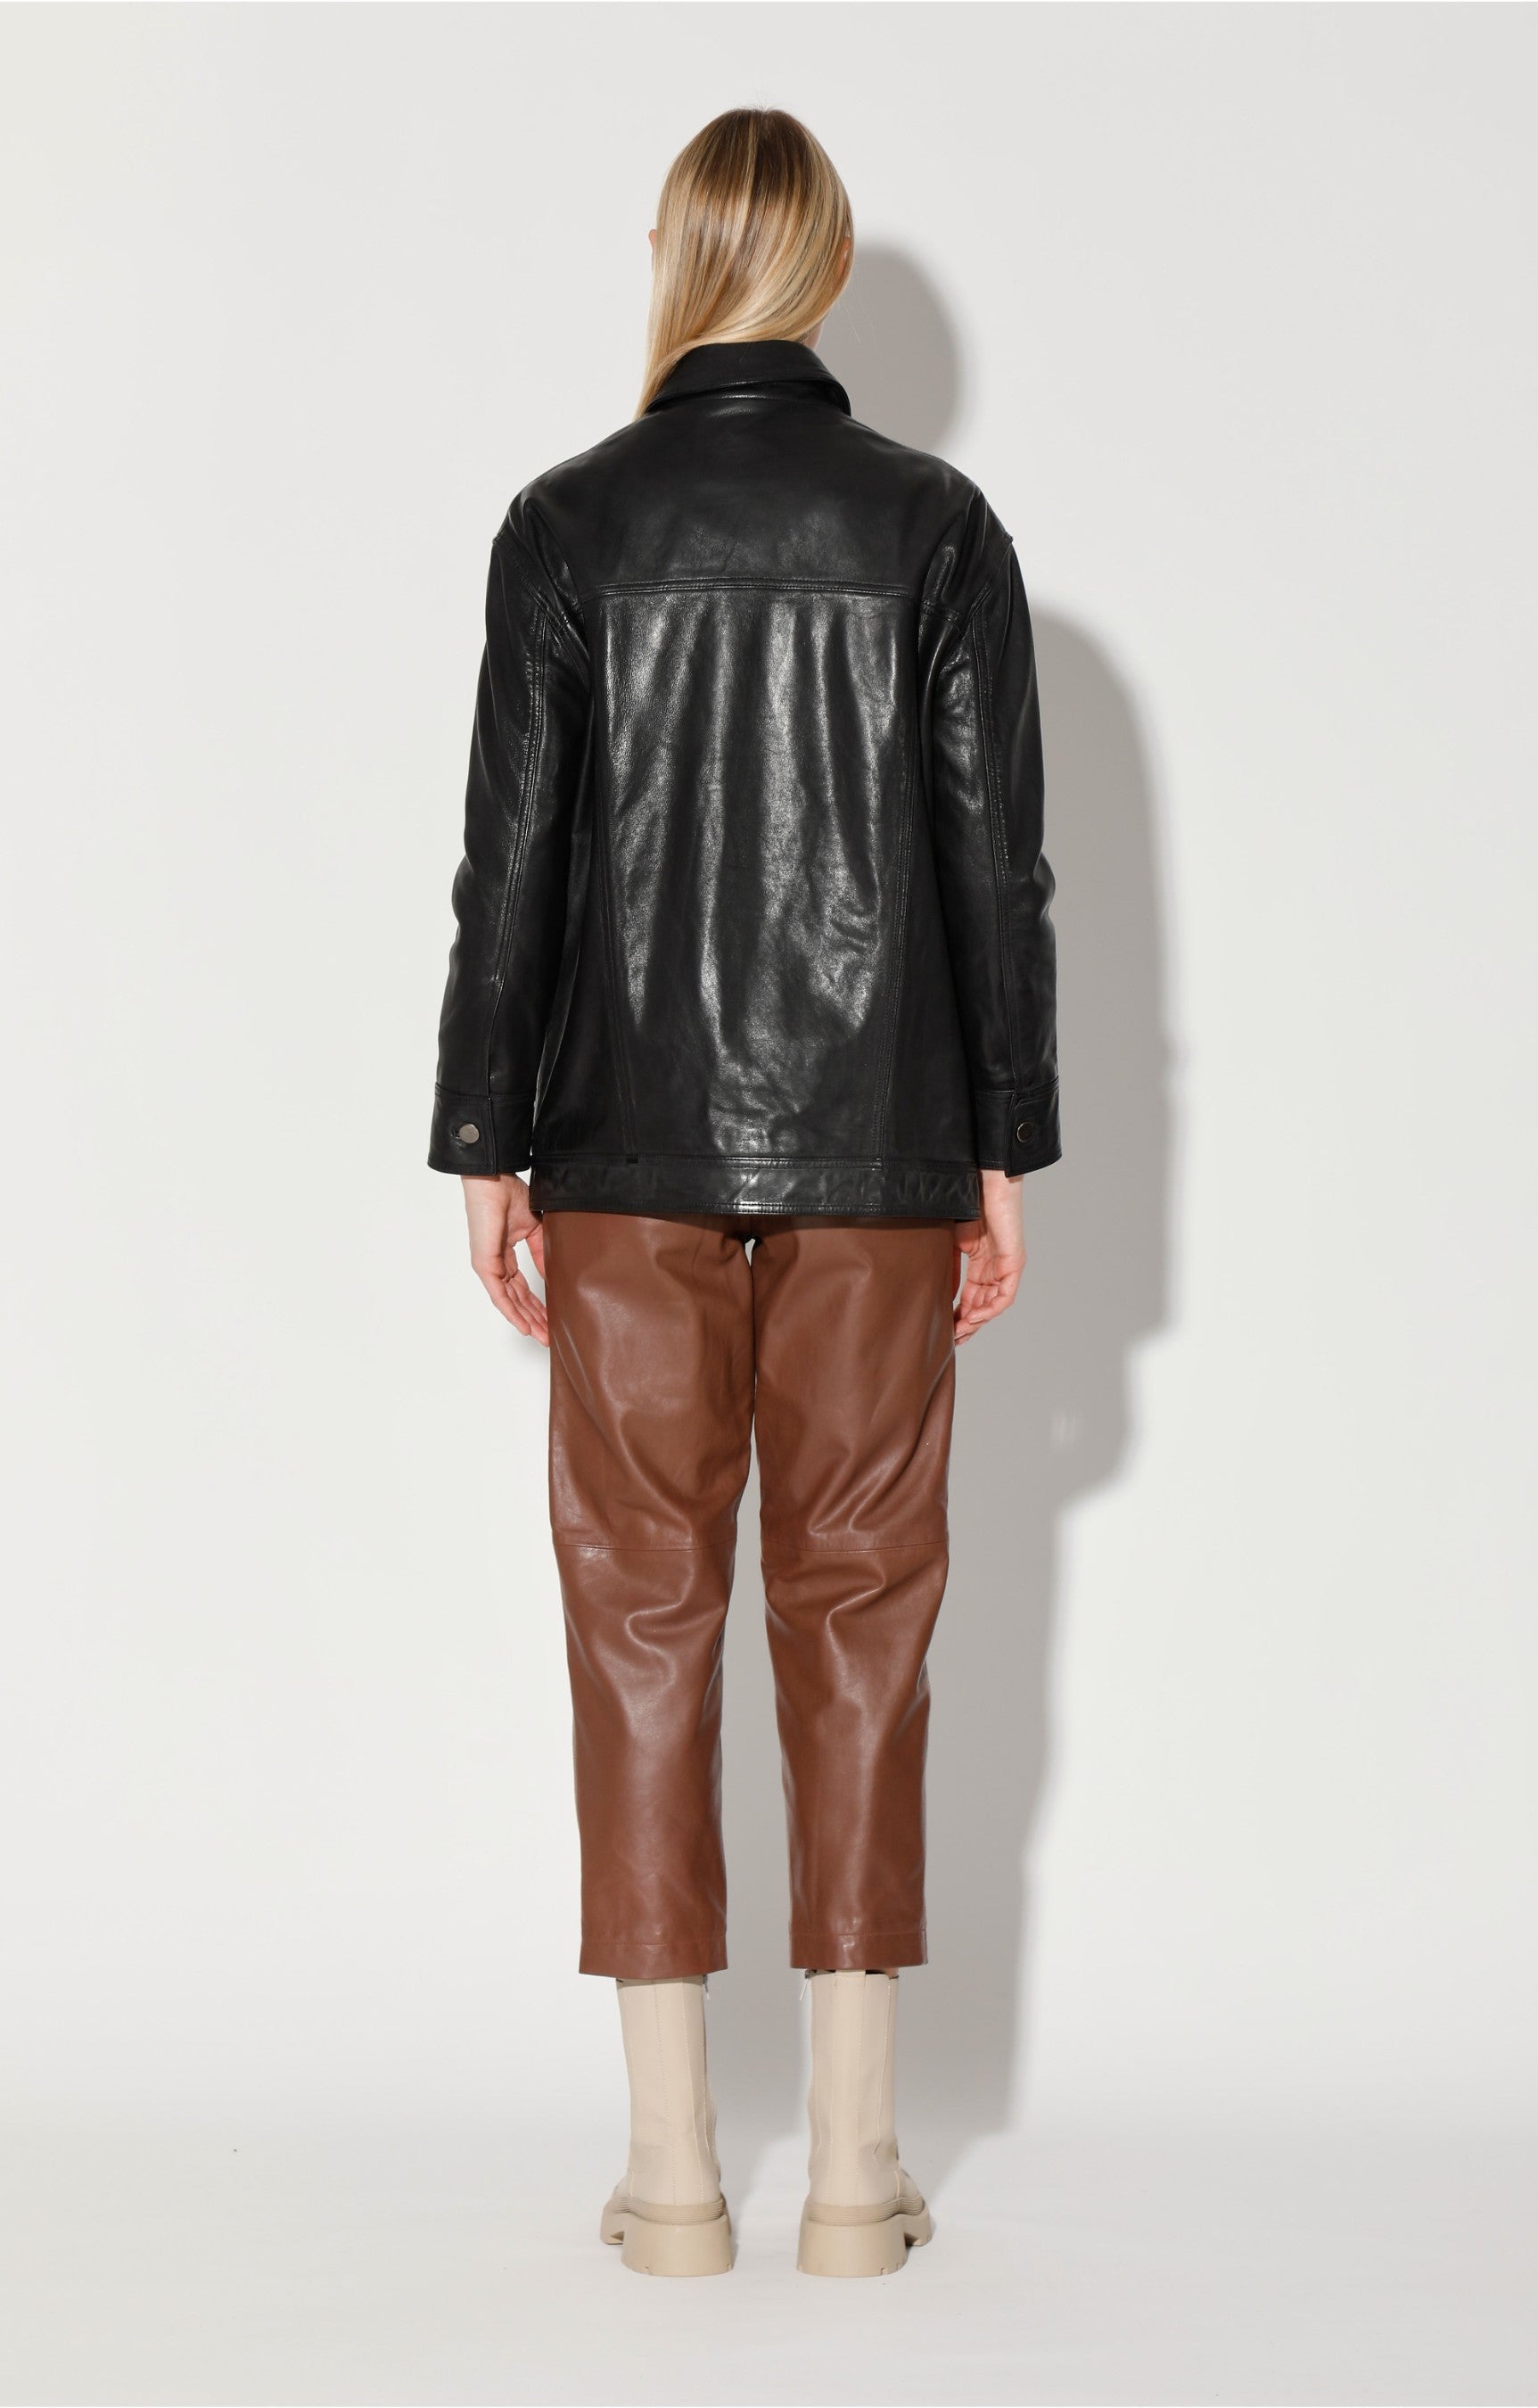 Sutton Jacket, Black - VT Wash Leather by Walter Baker